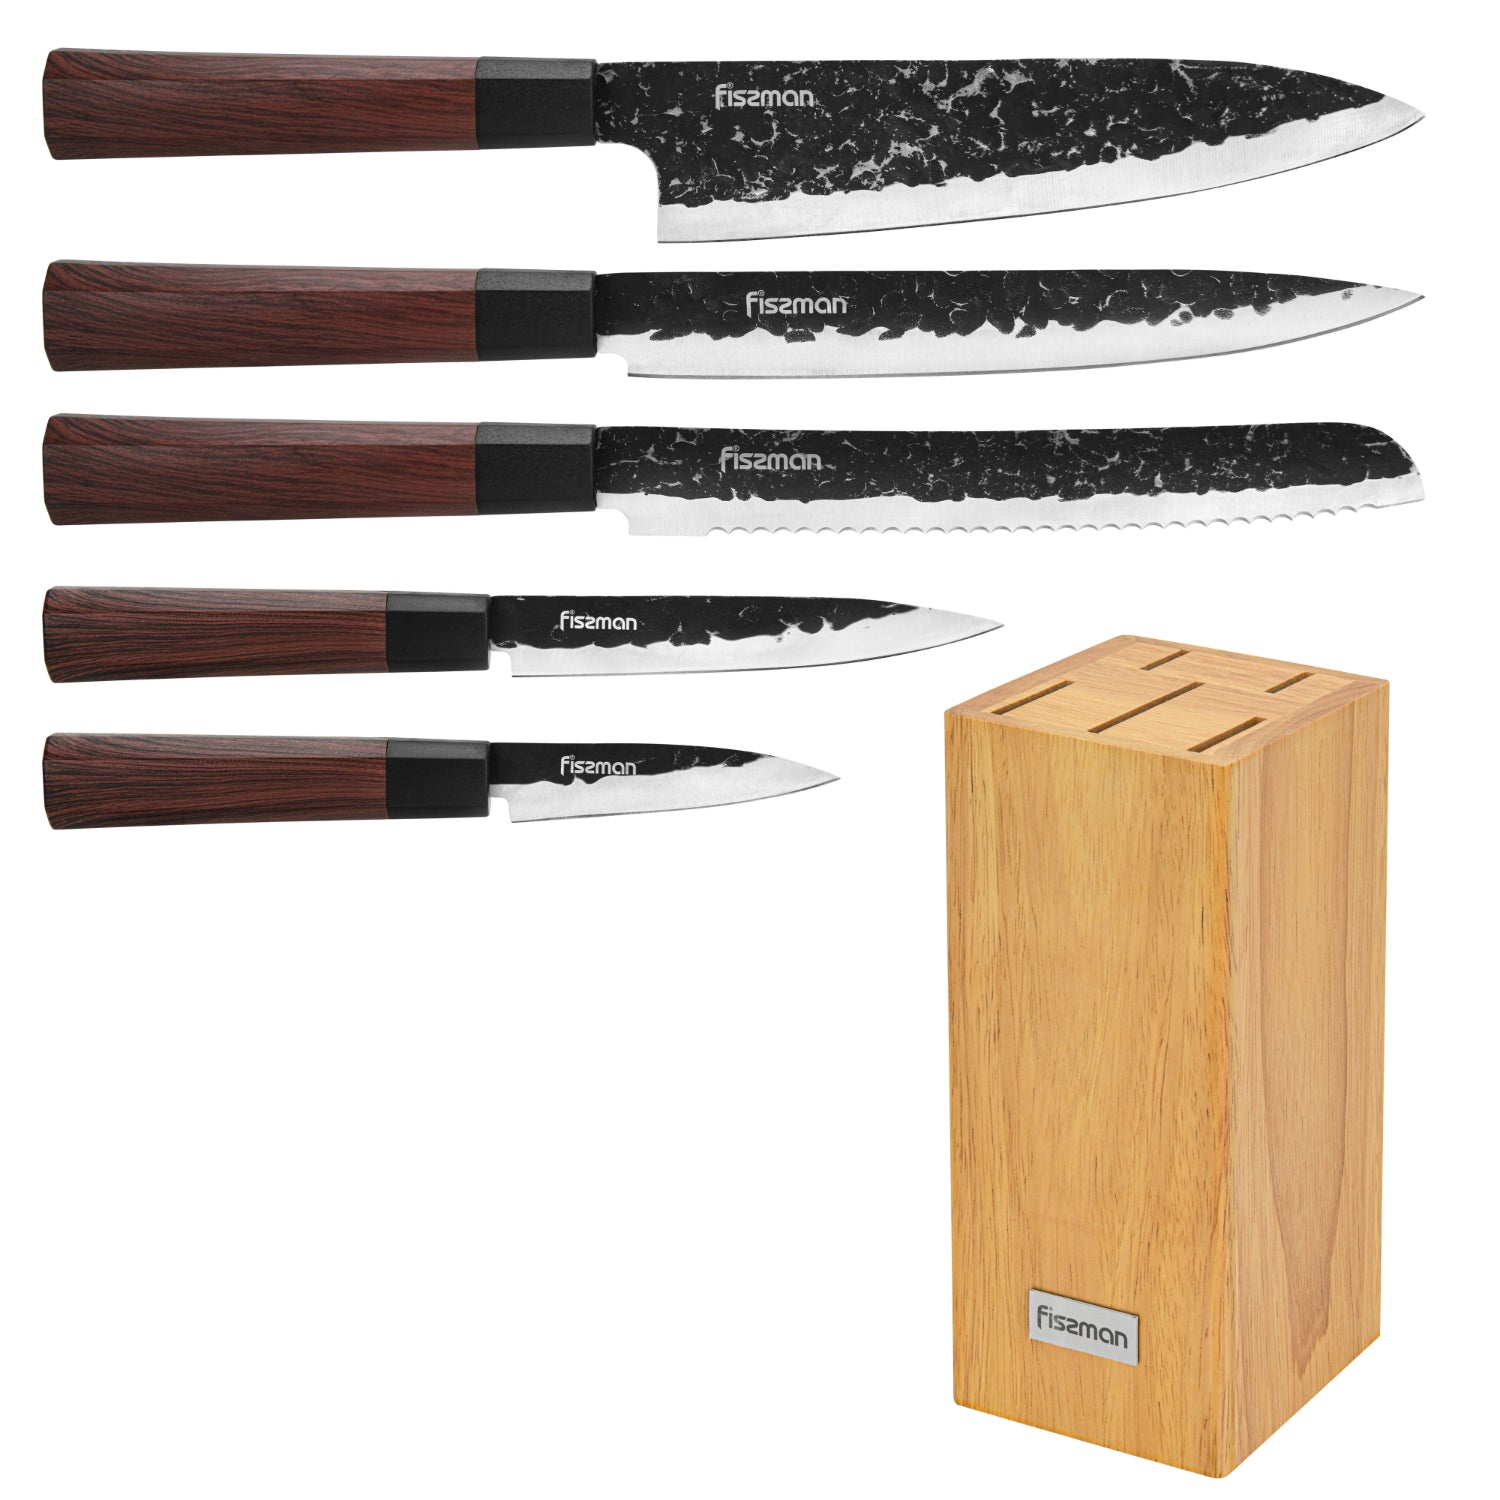 Fissman 6 Piece Knife Set Solveig with Wooden Block 420J2 Steel, Chef Knife 20cm, Slicing Knife 20cm, Bread Knife 20cm, Utility Knife 13cm, Pairing Knife 9cm